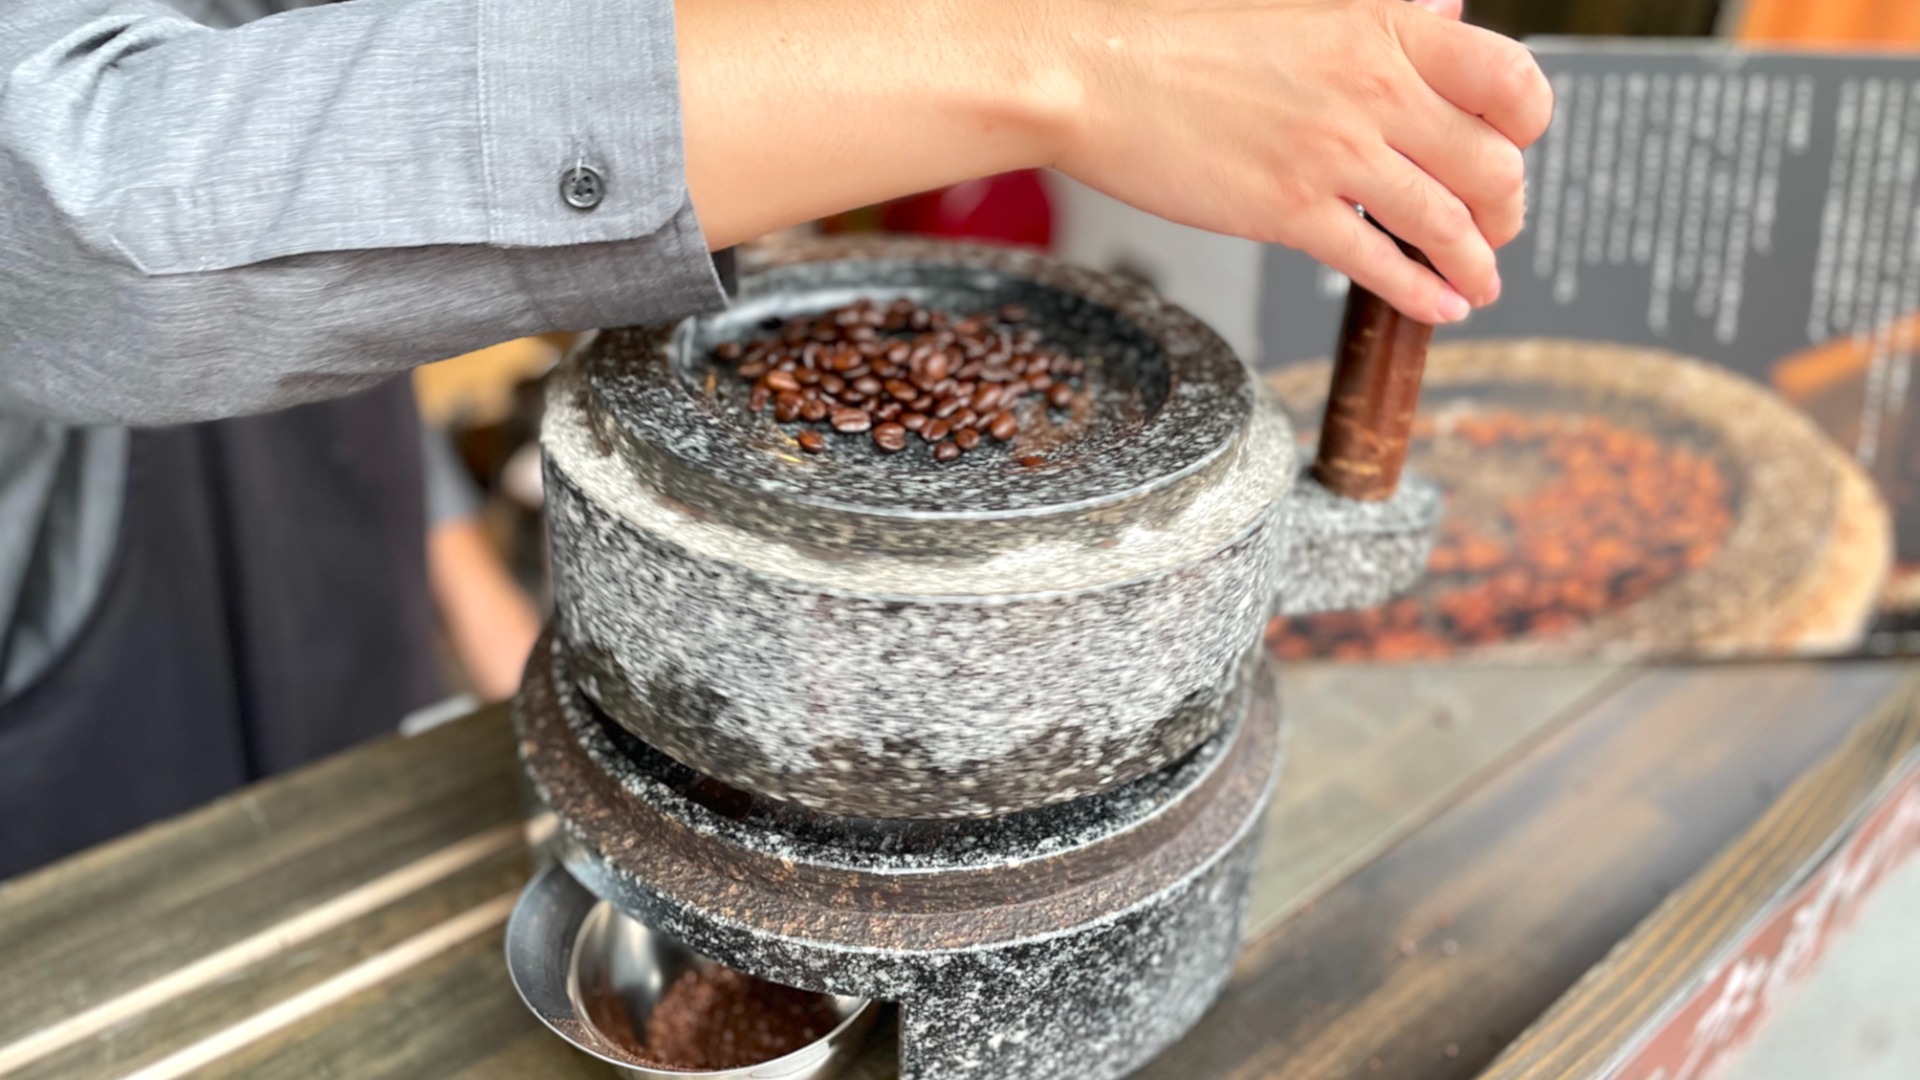 石臼(コーヒー豆用) - 工芸品